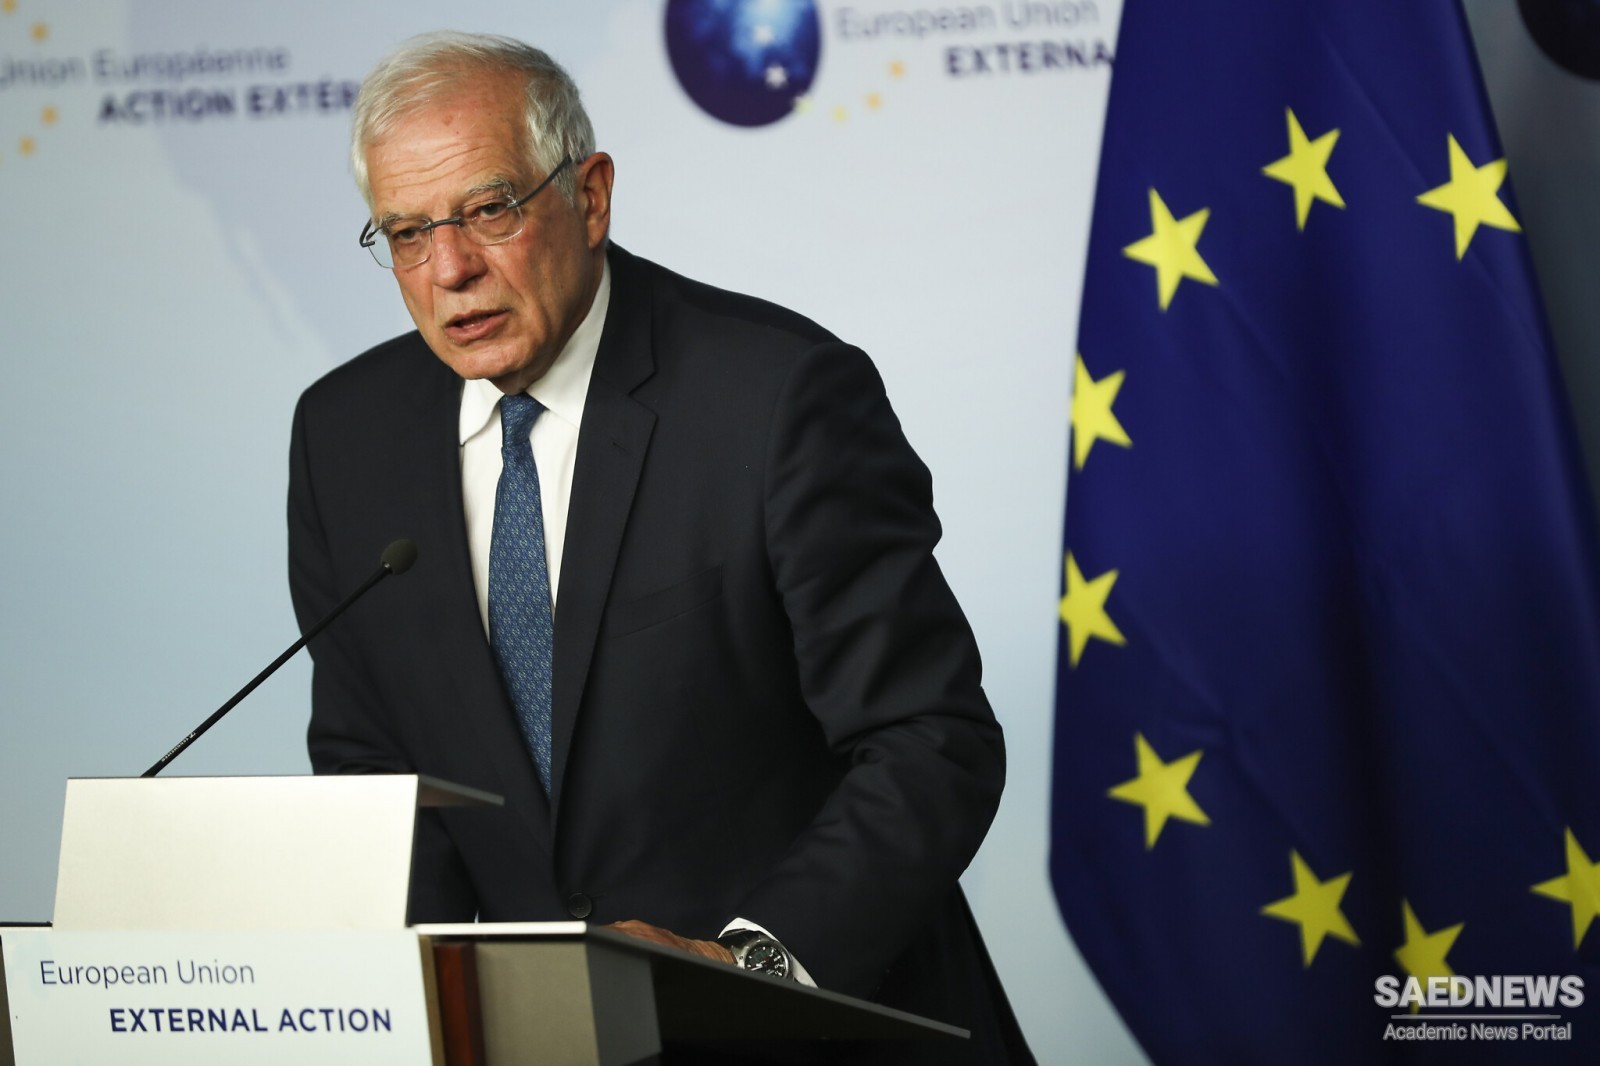 Iran FM Zarif Sends a Letter to EU Foreign Policy Chief Josep Borrell